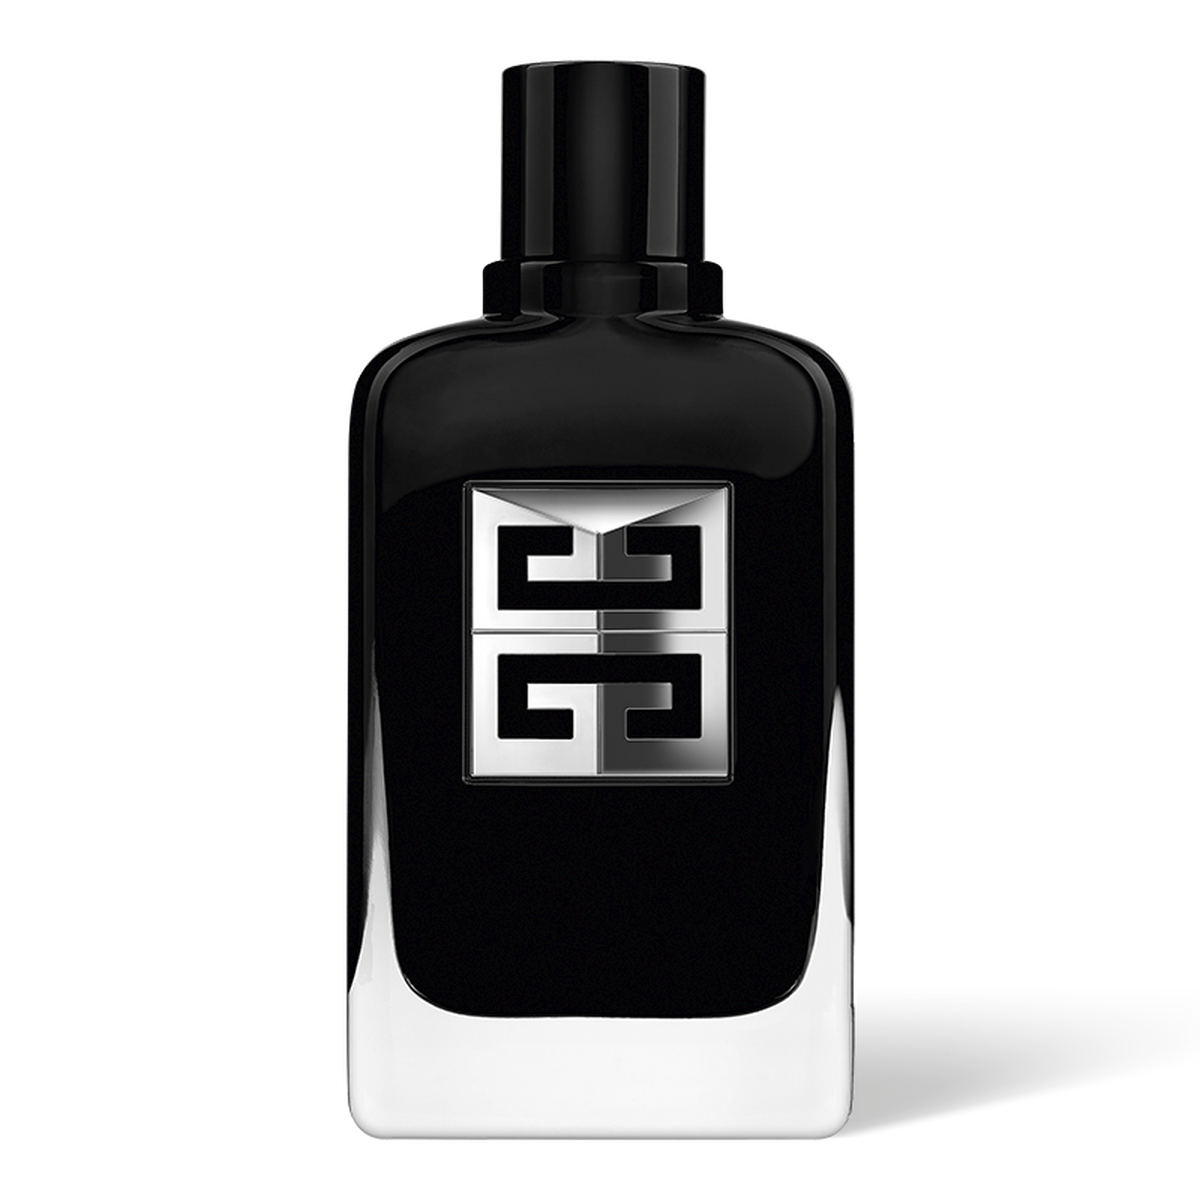 Givenchy Gentleman Society Eau de Parfum- www.theperfumestoreinc.com #perfume